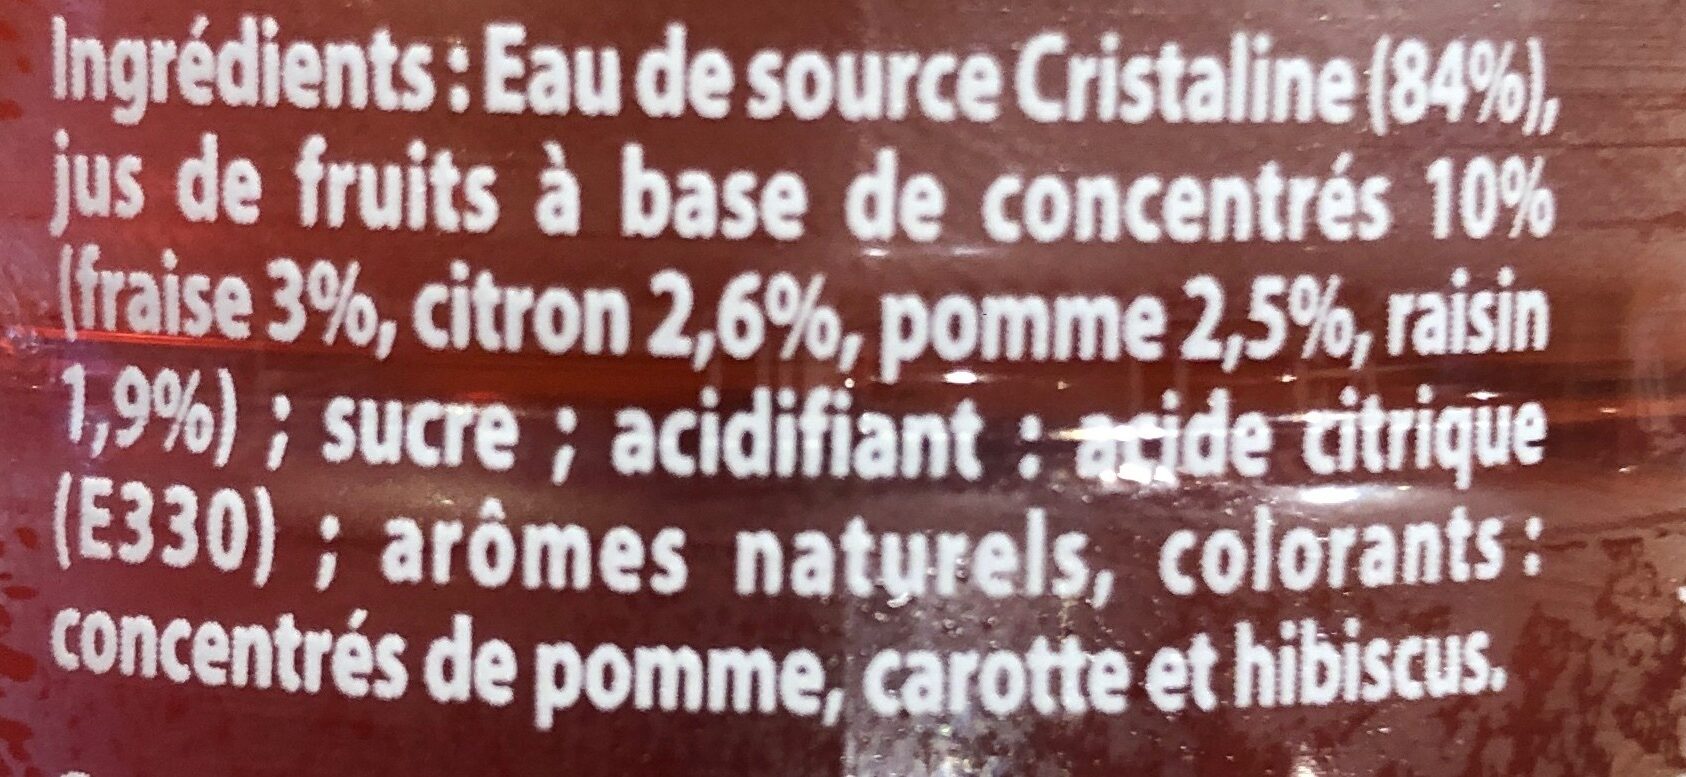 Cristaline Fraise 🍓 - Ingrédients - fr